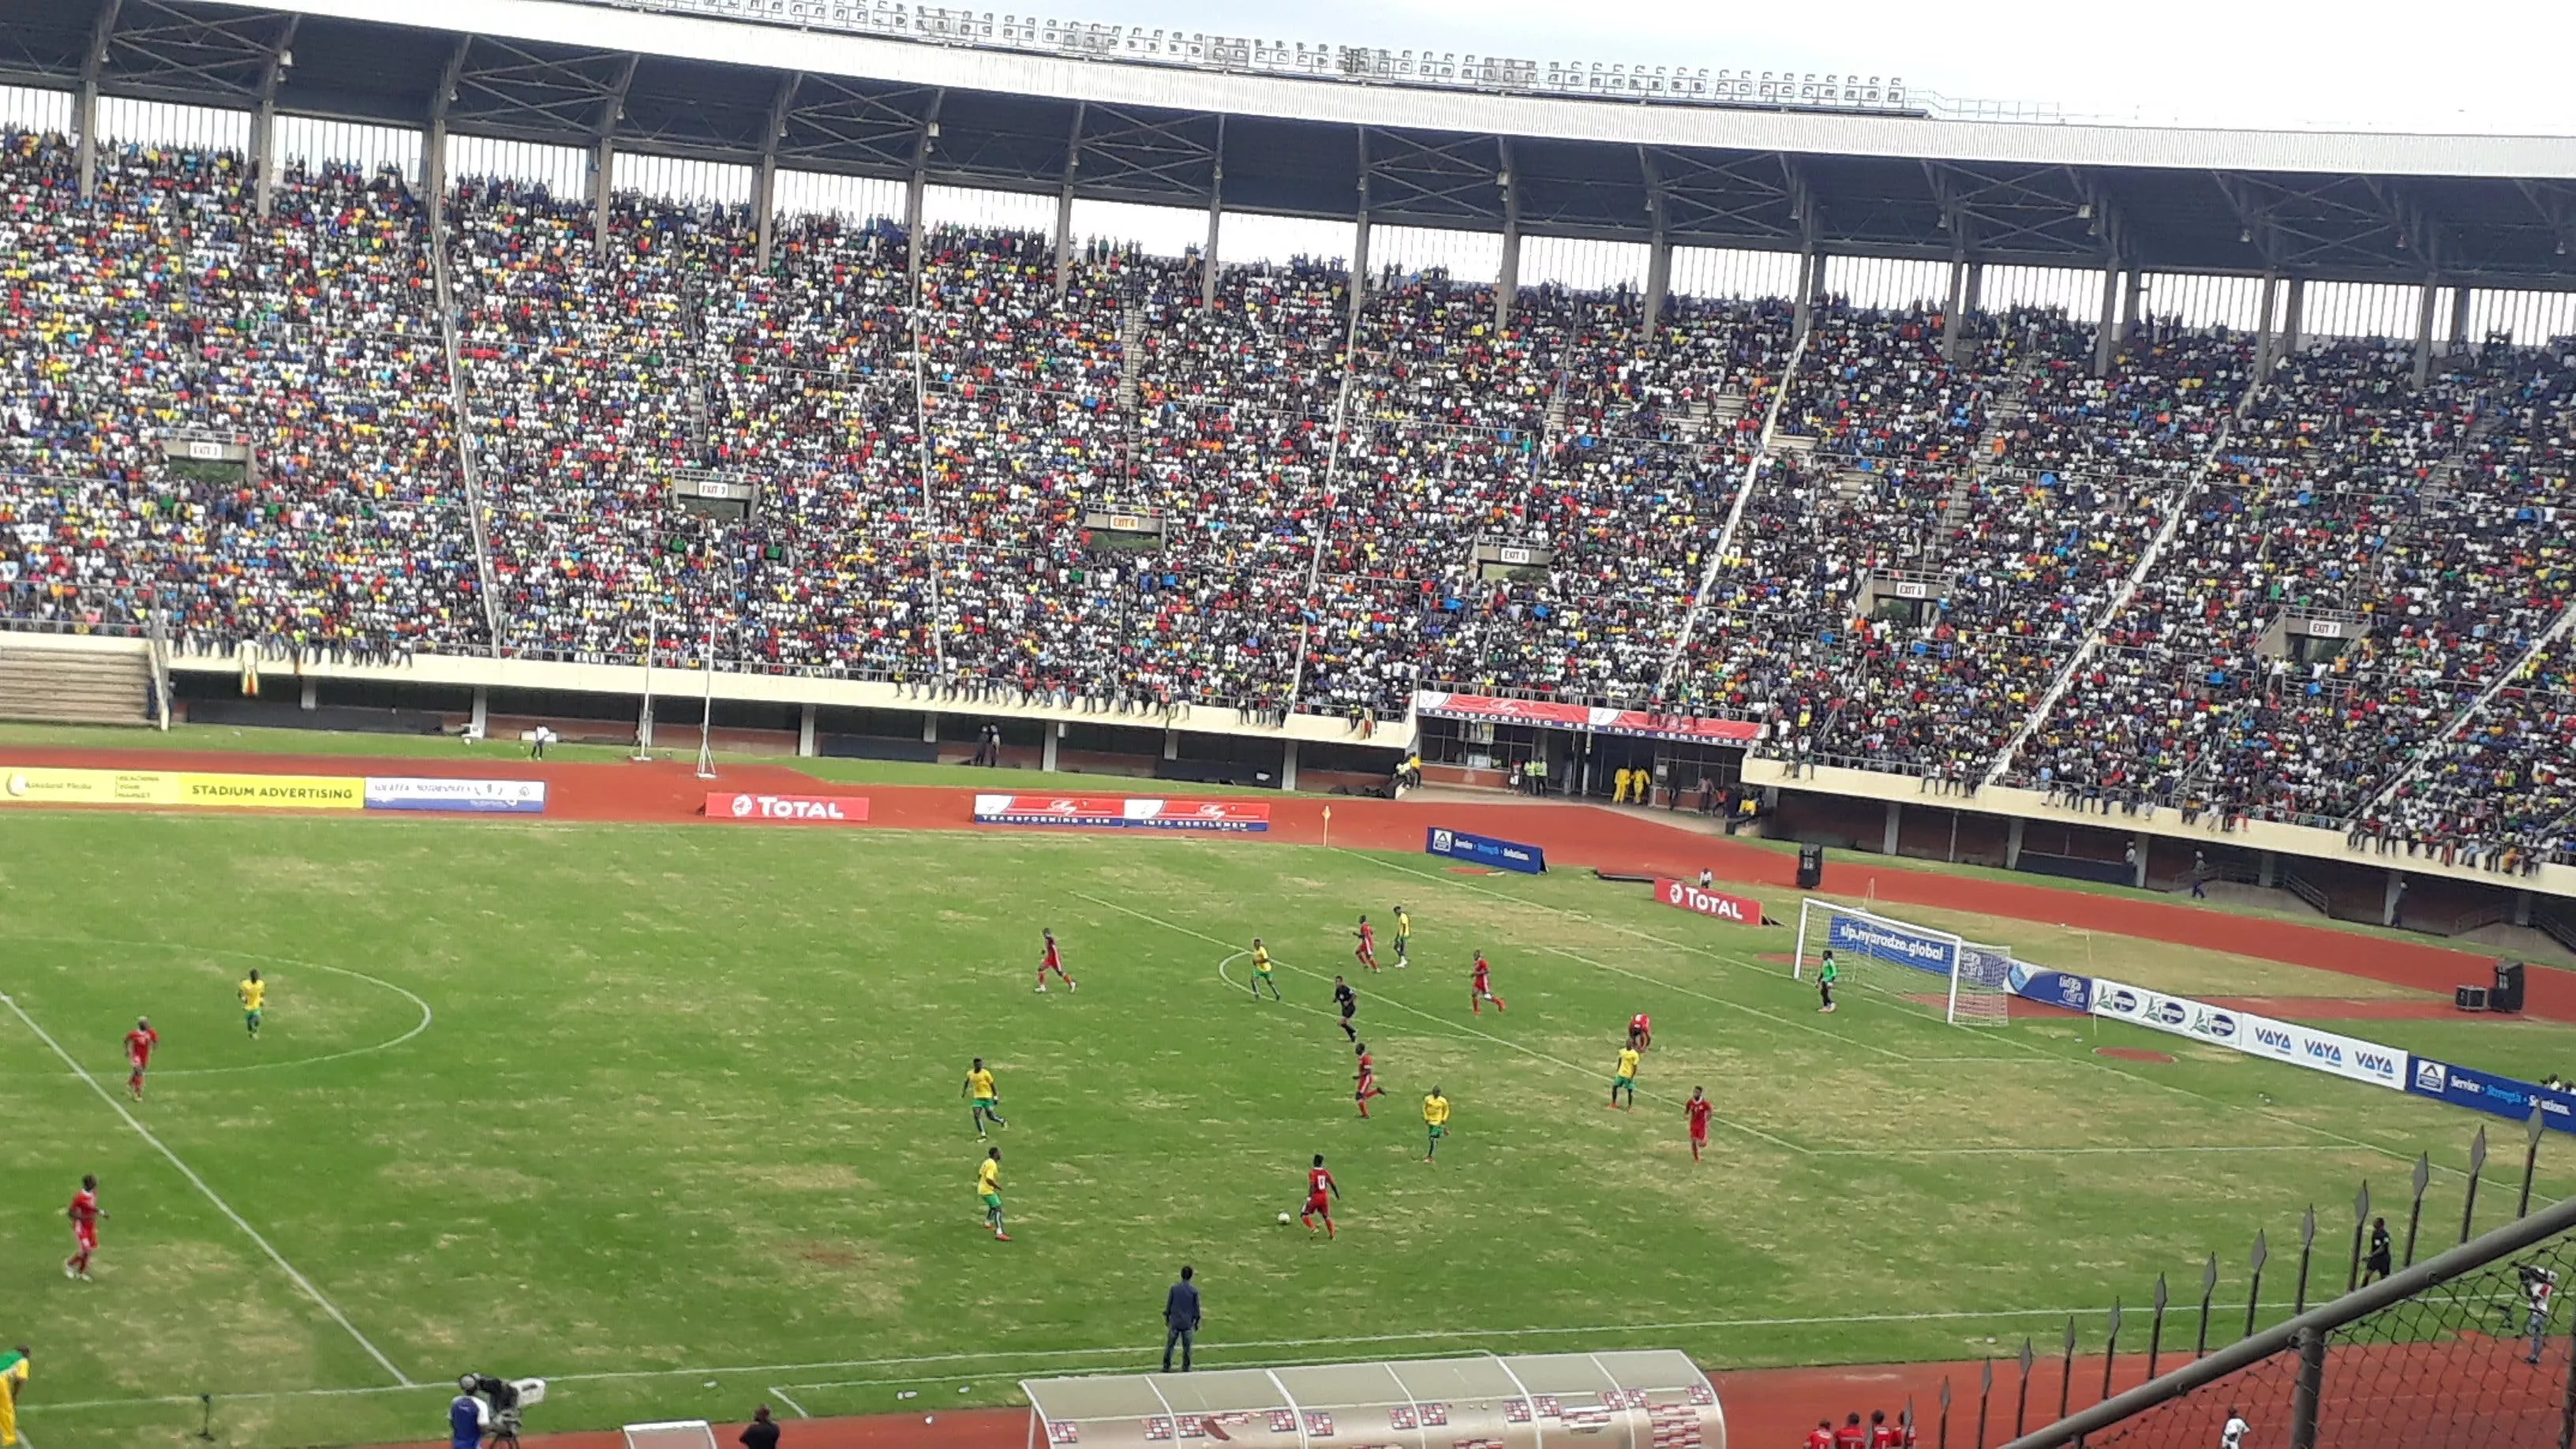 National Sports Stadium in Zimbabwe, Africa | Football - Rated 3.2